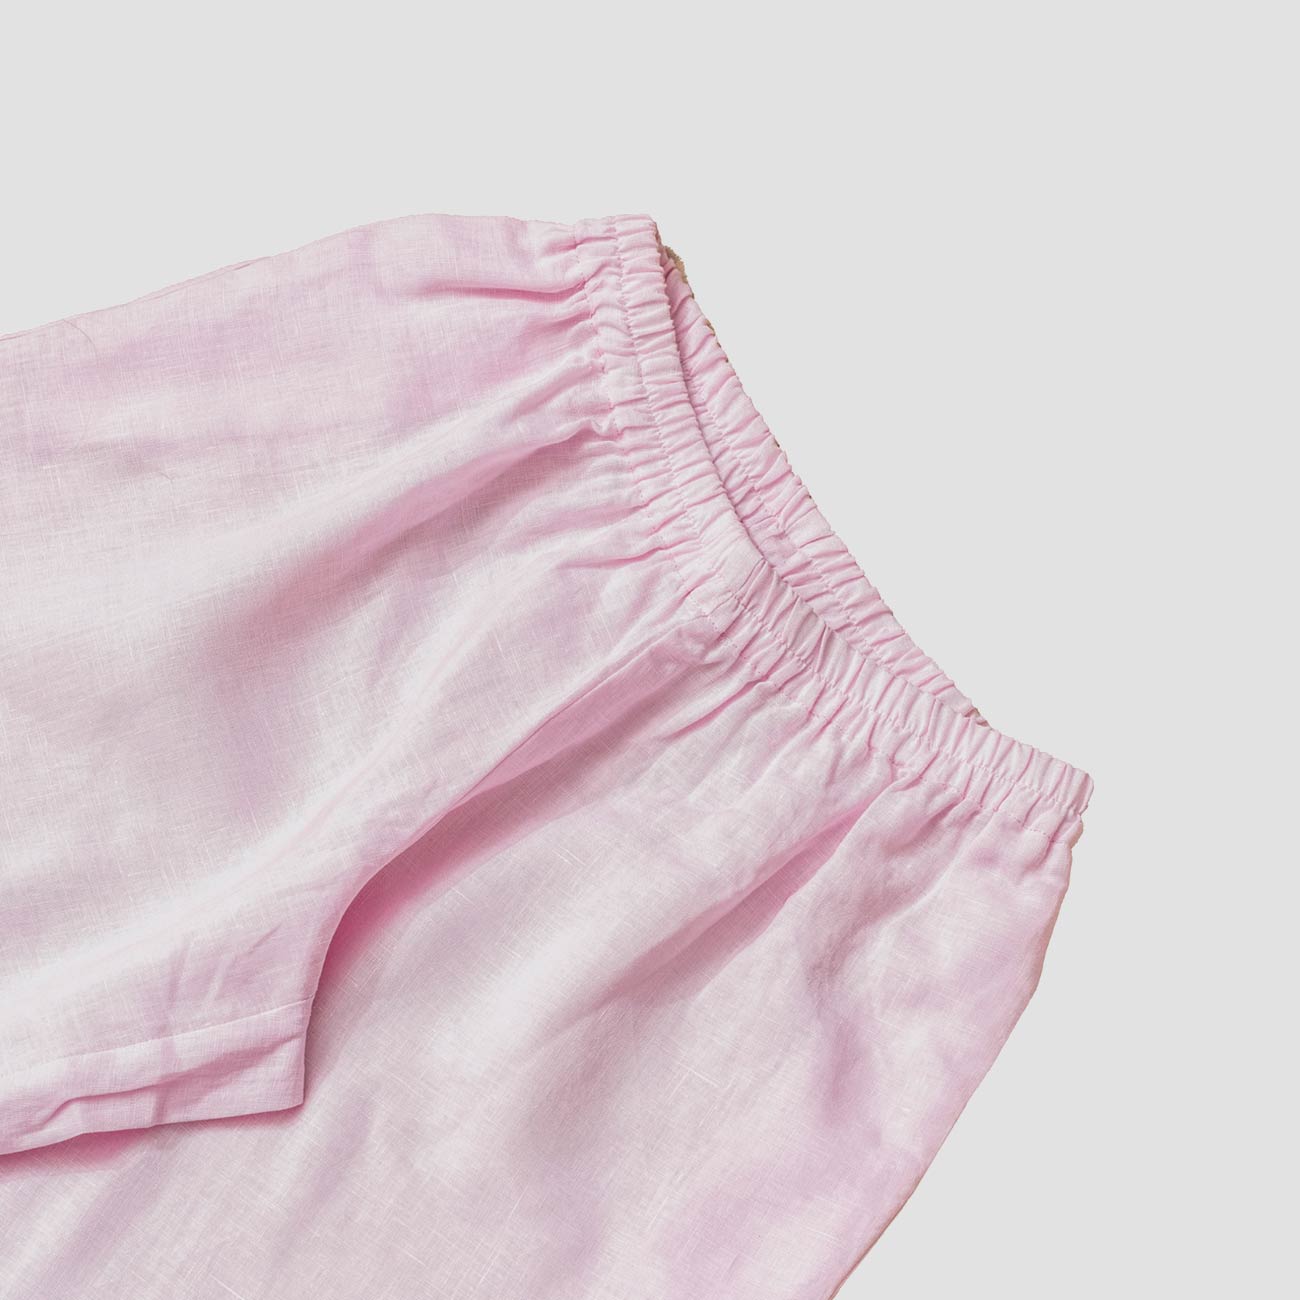 Men's Blush Pink Linen Pyjama Trousers - Piglet in Bed